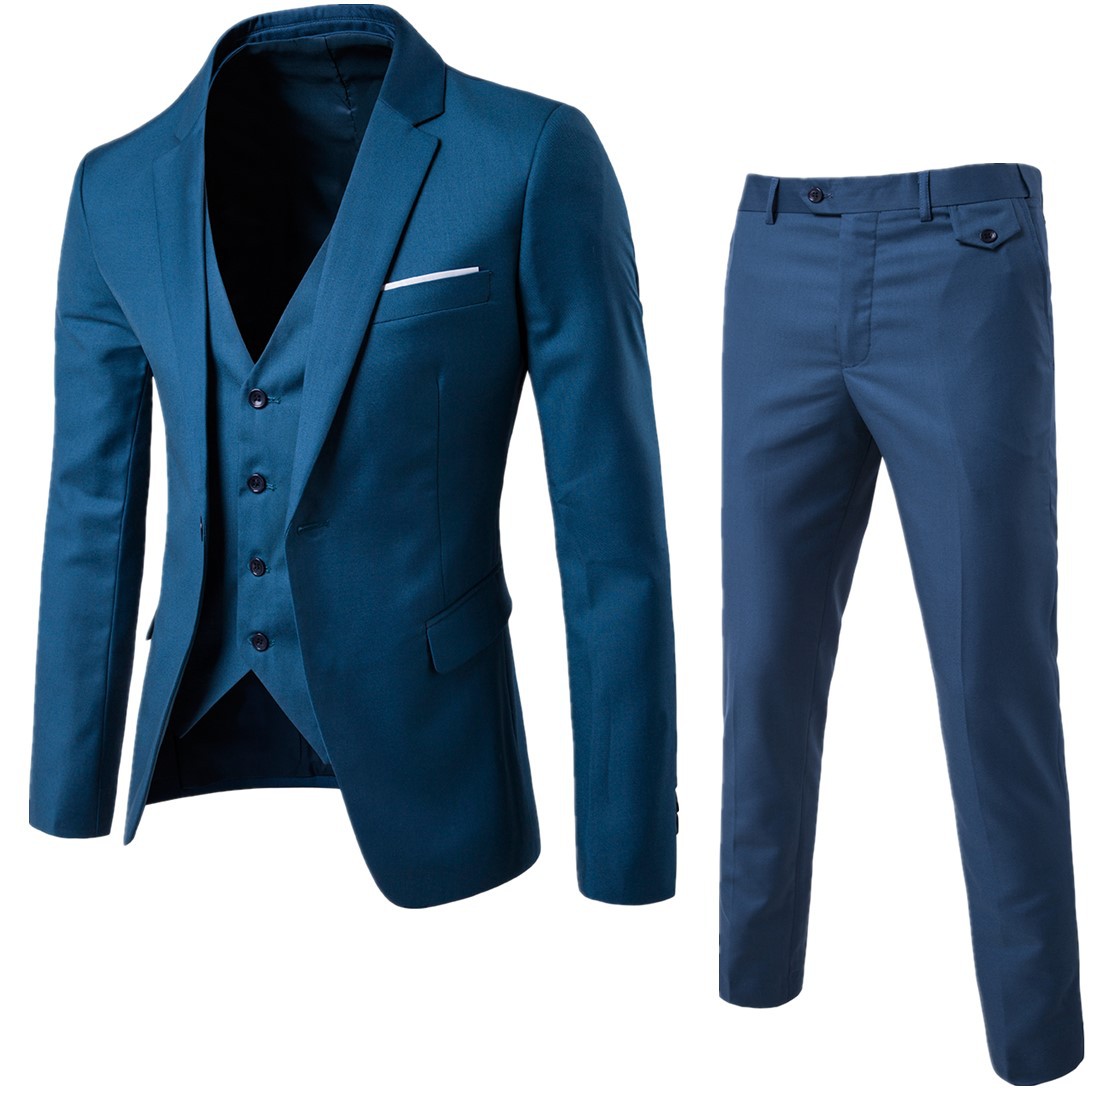 Spring 2019 new western suit Korean slim check suit western youth men's three piece suit manufacturer wholesale